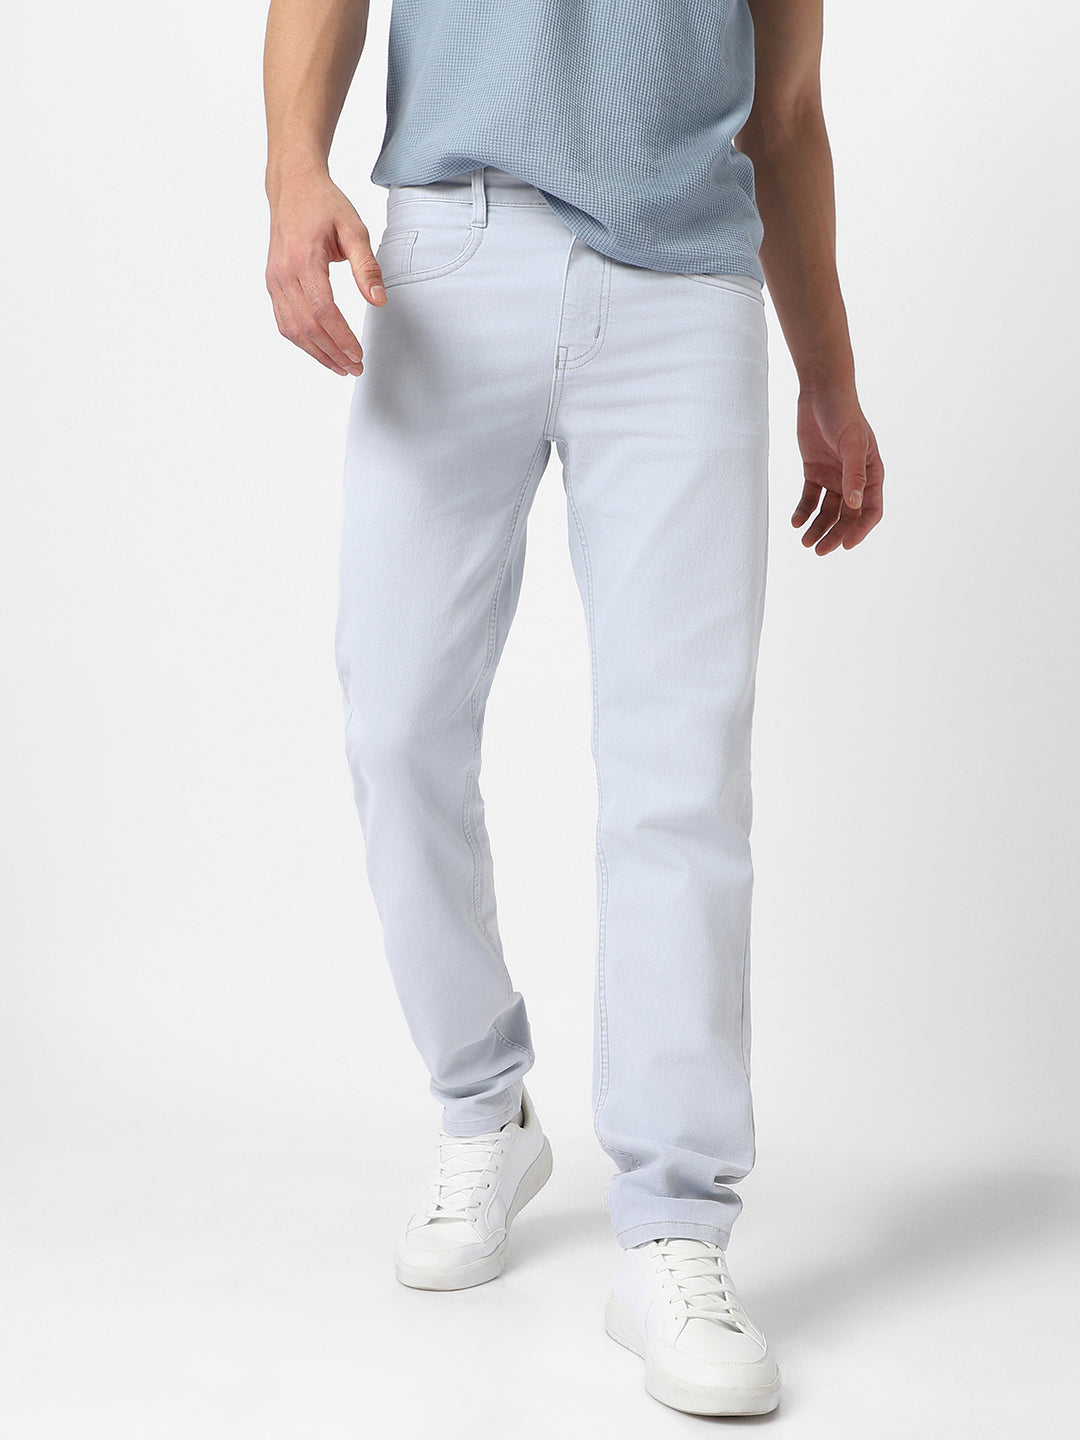 Urbano Fashion Men's Whitish Grey Regular Fit Washed Jeans Stretchable